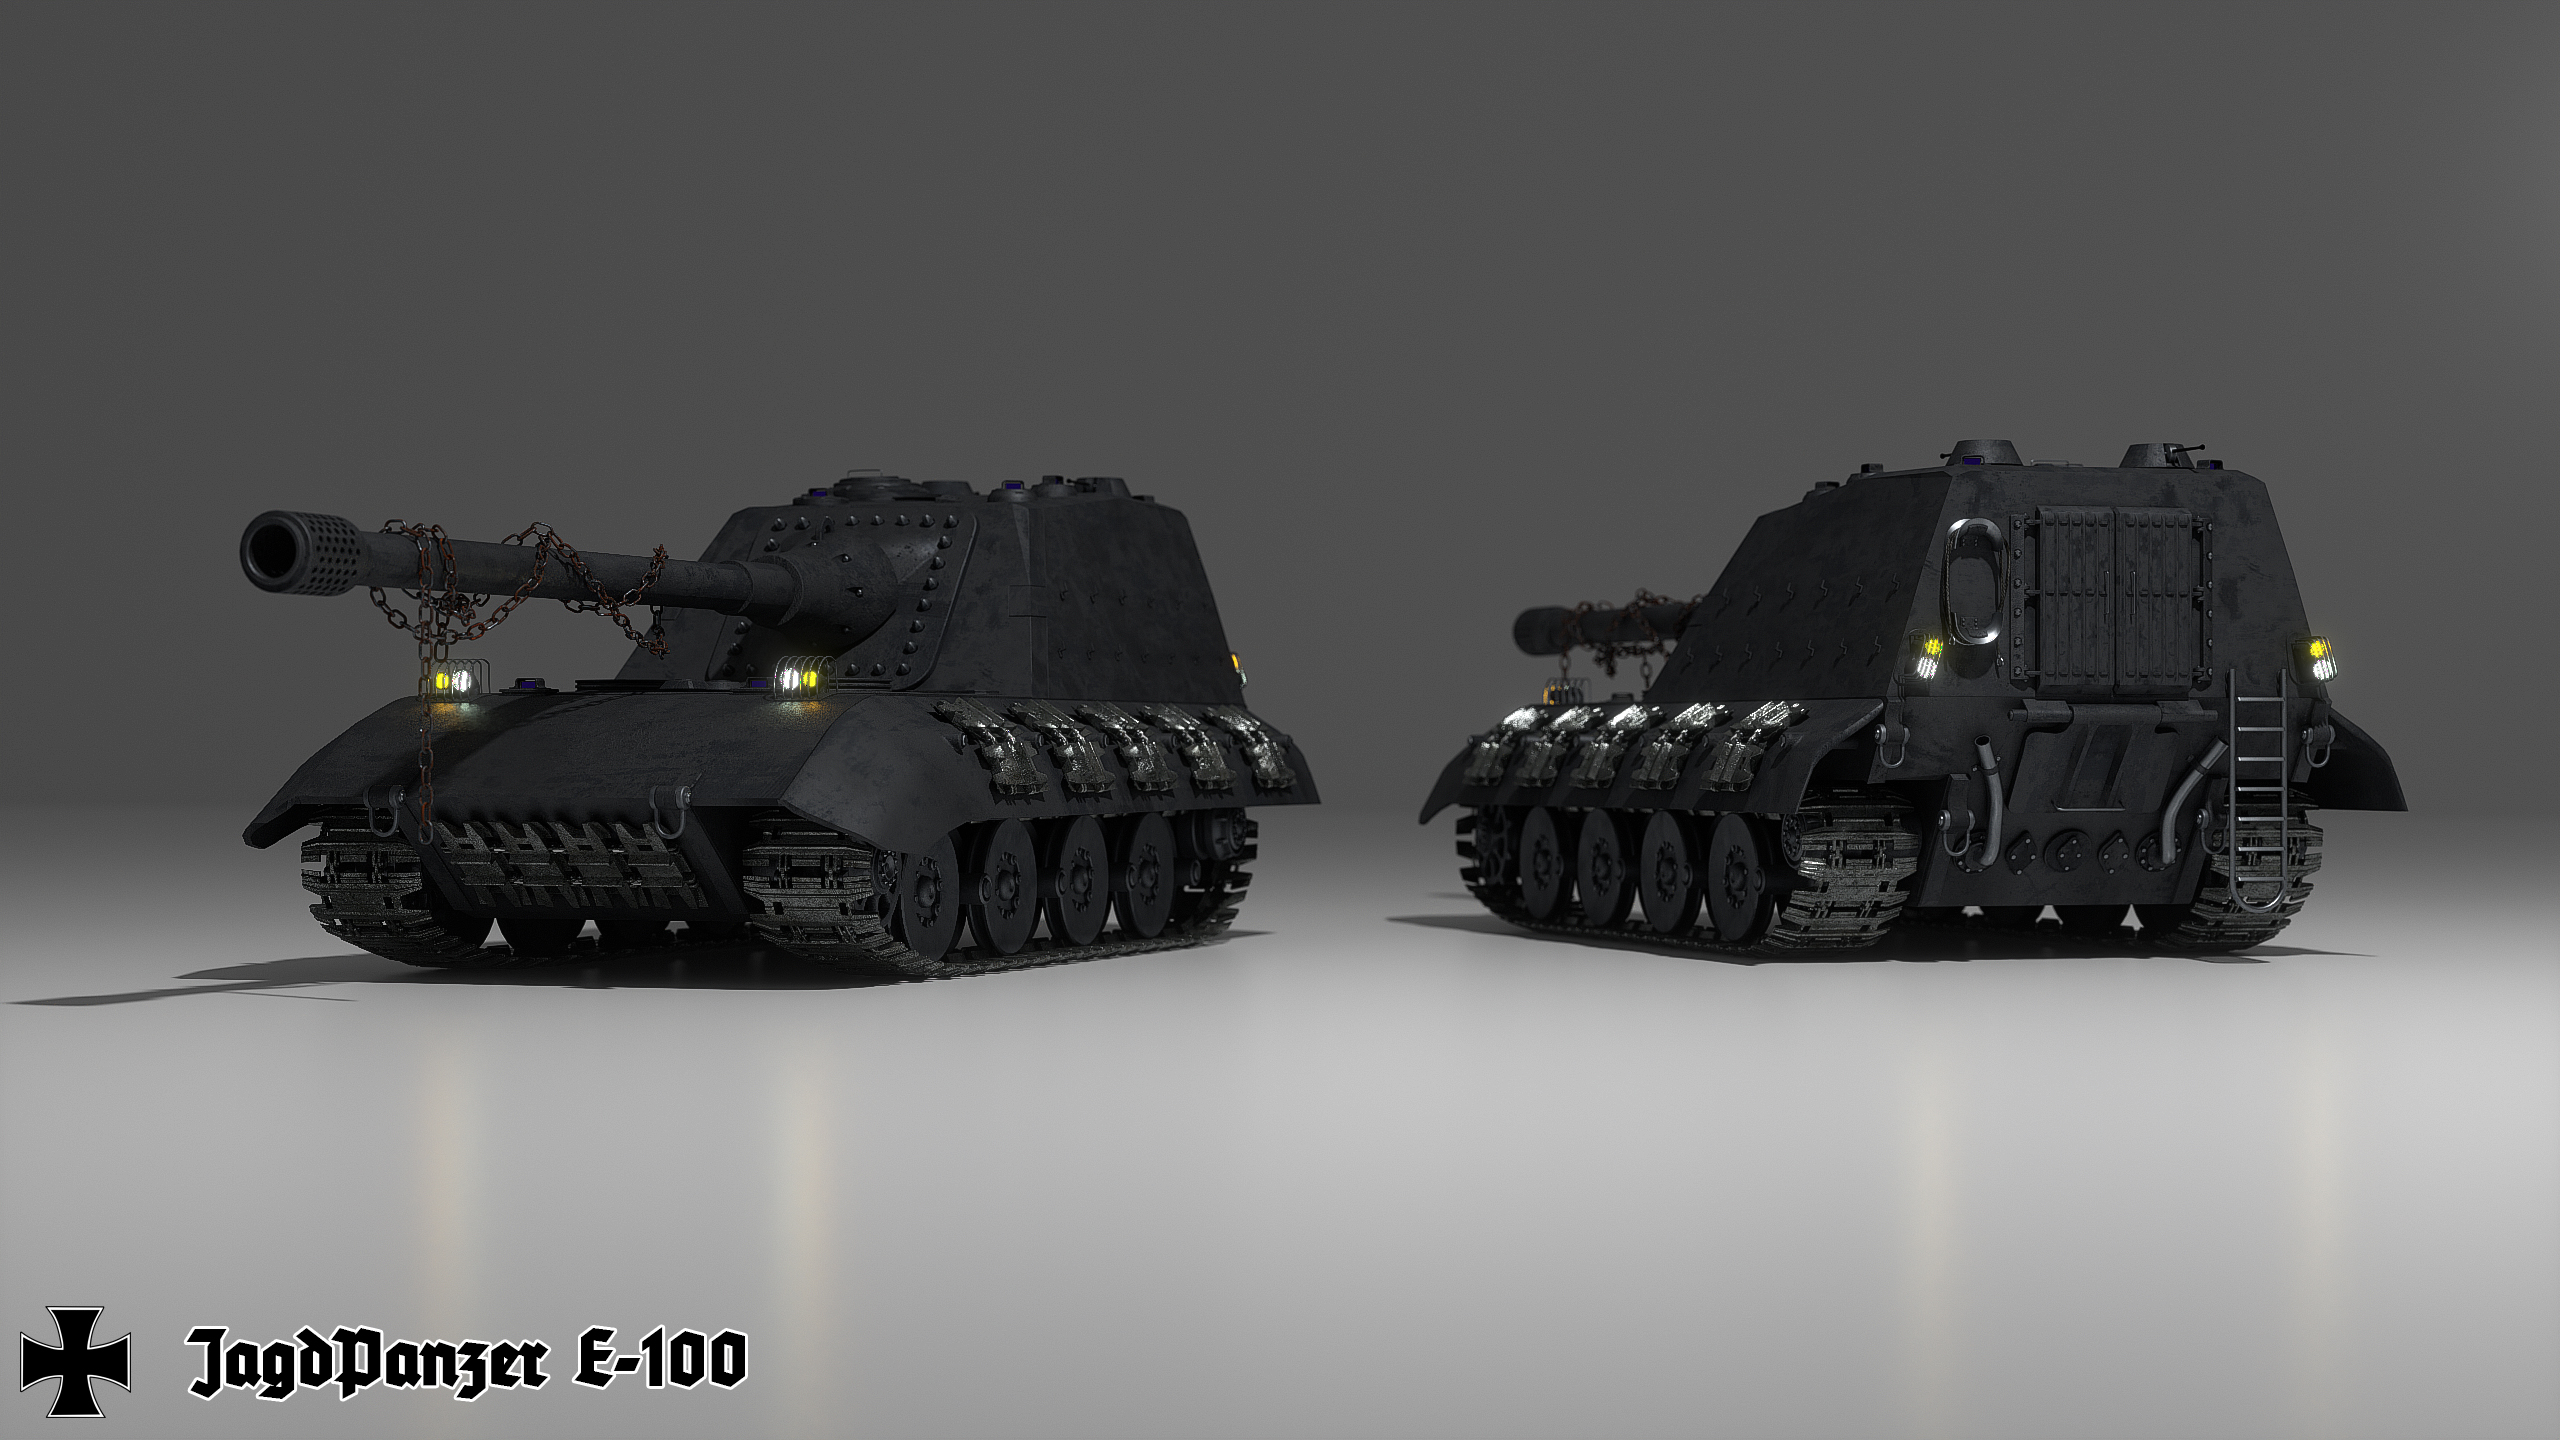 Jagdpanzer E 100 Military Vehicle Tank World War Ii German Army Lights Steel Armor 3D CGi Digital Re 2560x1440